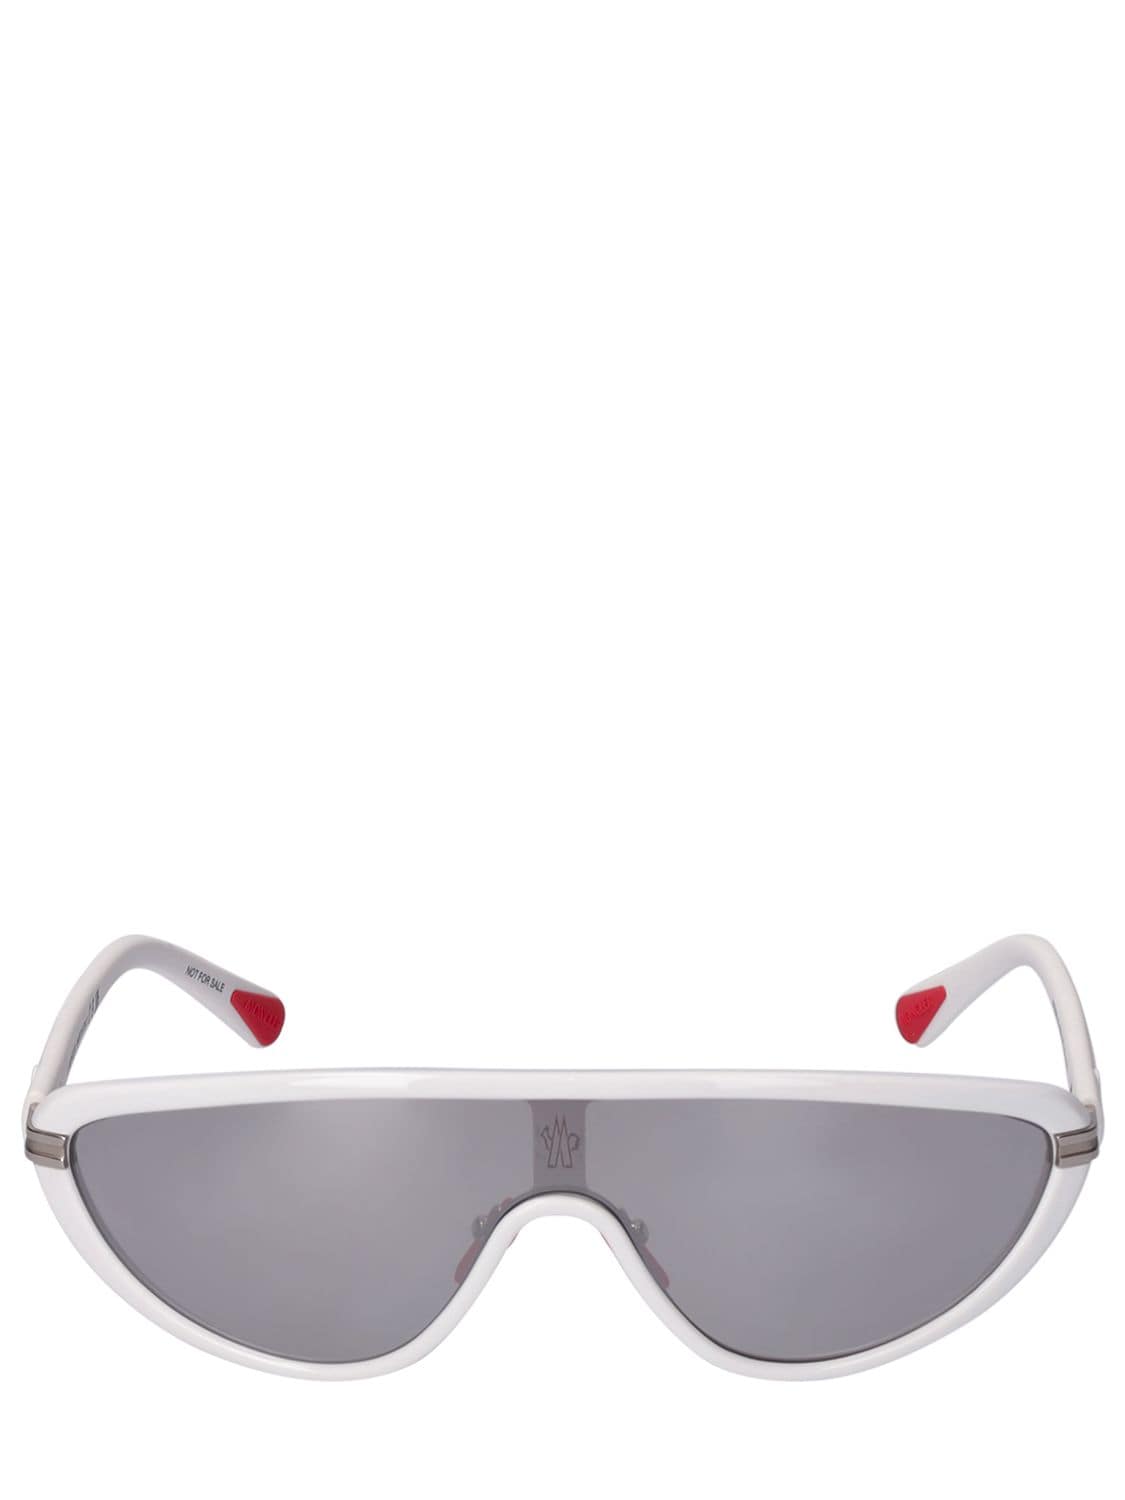 Vitiesse Mask Sunglasses